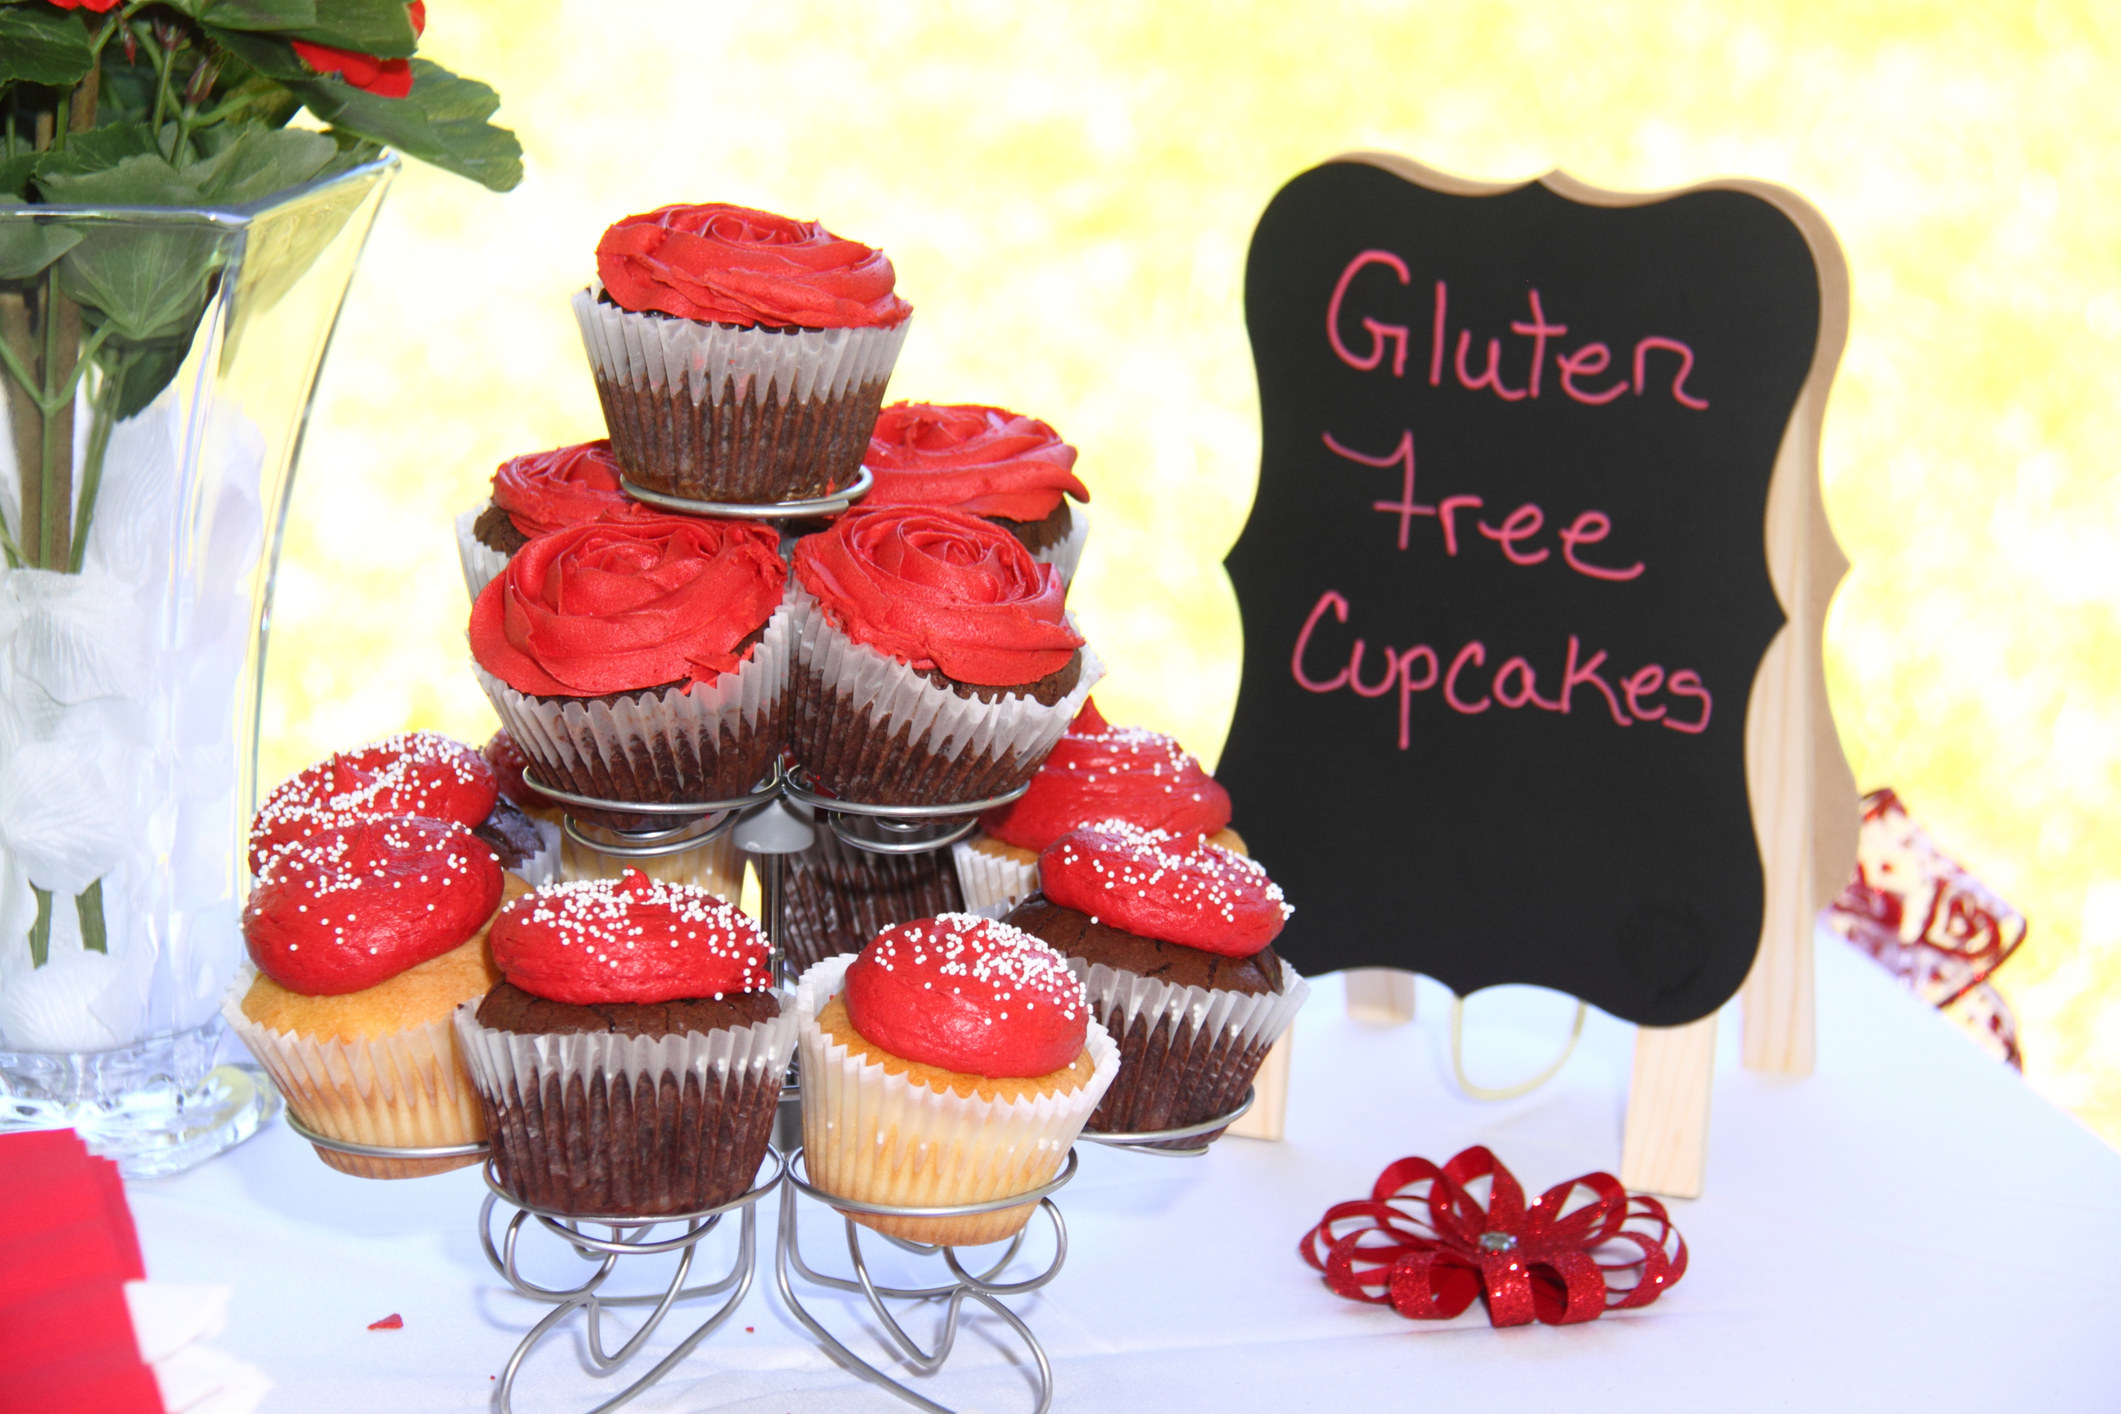 &quot;Gluten free cupcakes&quot;